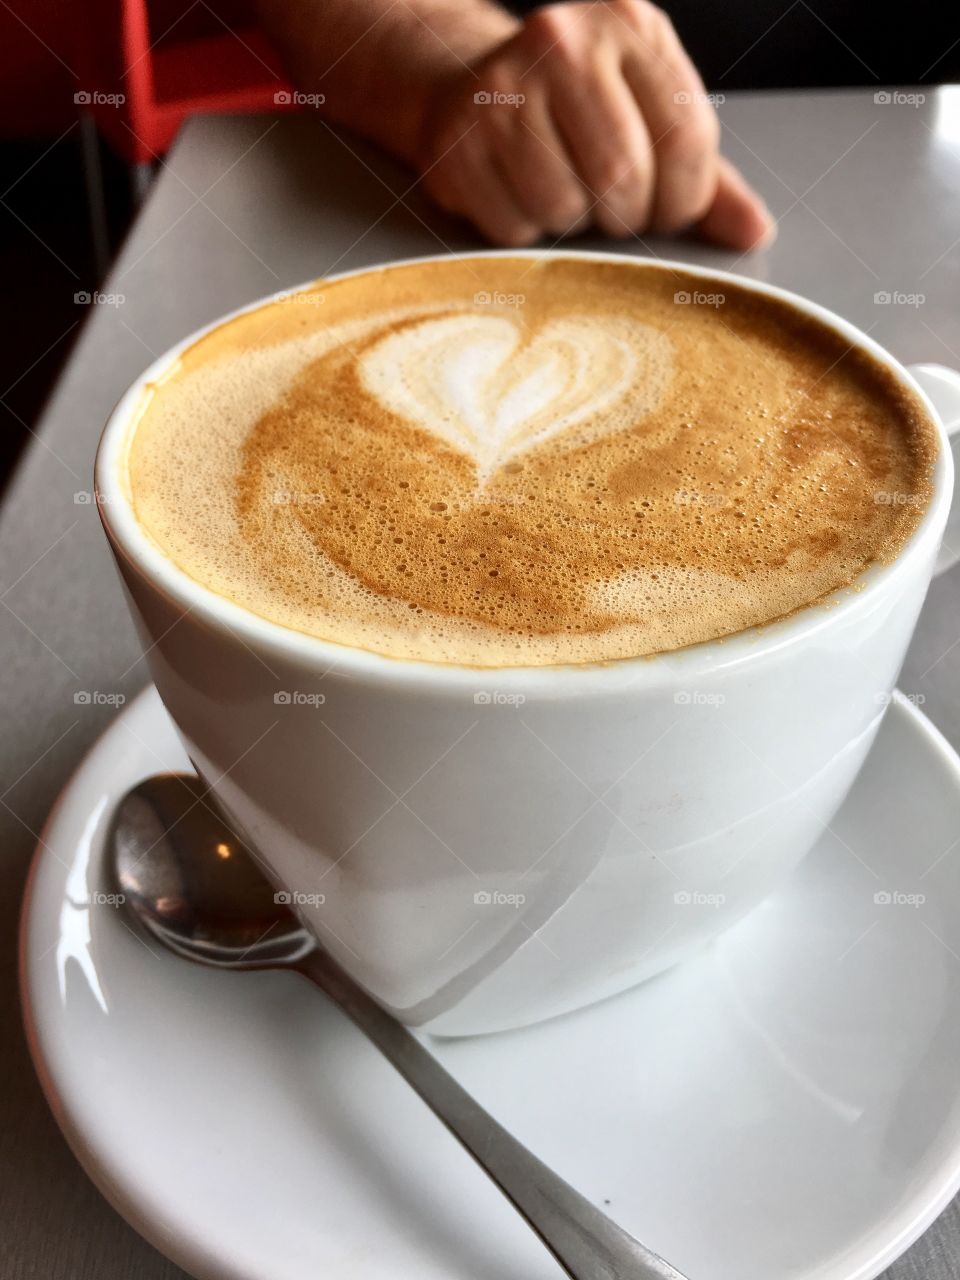 I love you, heart shape in the foam of a Cafe latte in coffee shop, 